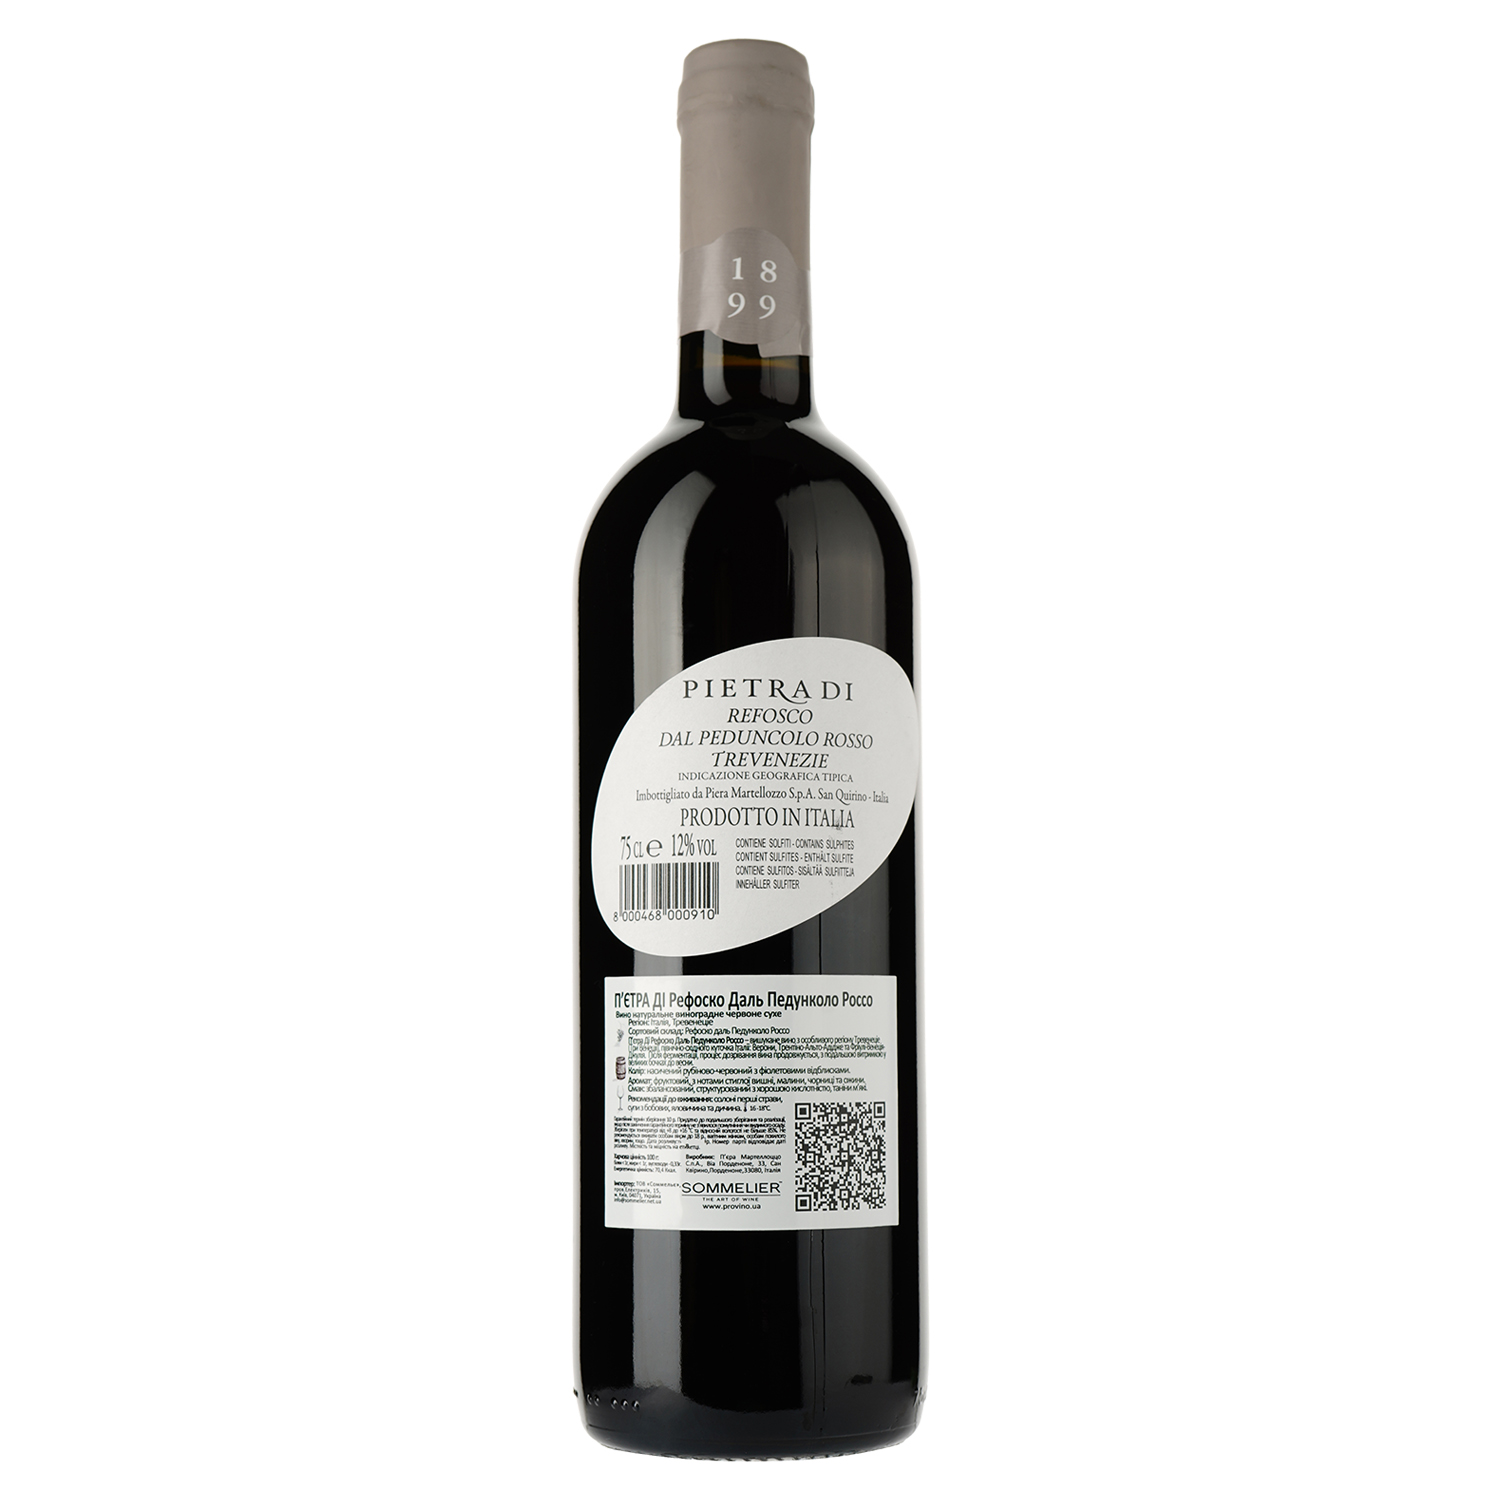 Вино Ronchi di Pietro di Refosco dal Peduncolo Rosso Tre Venezie IGT, красное, сухое, 0,75 л - фото 2